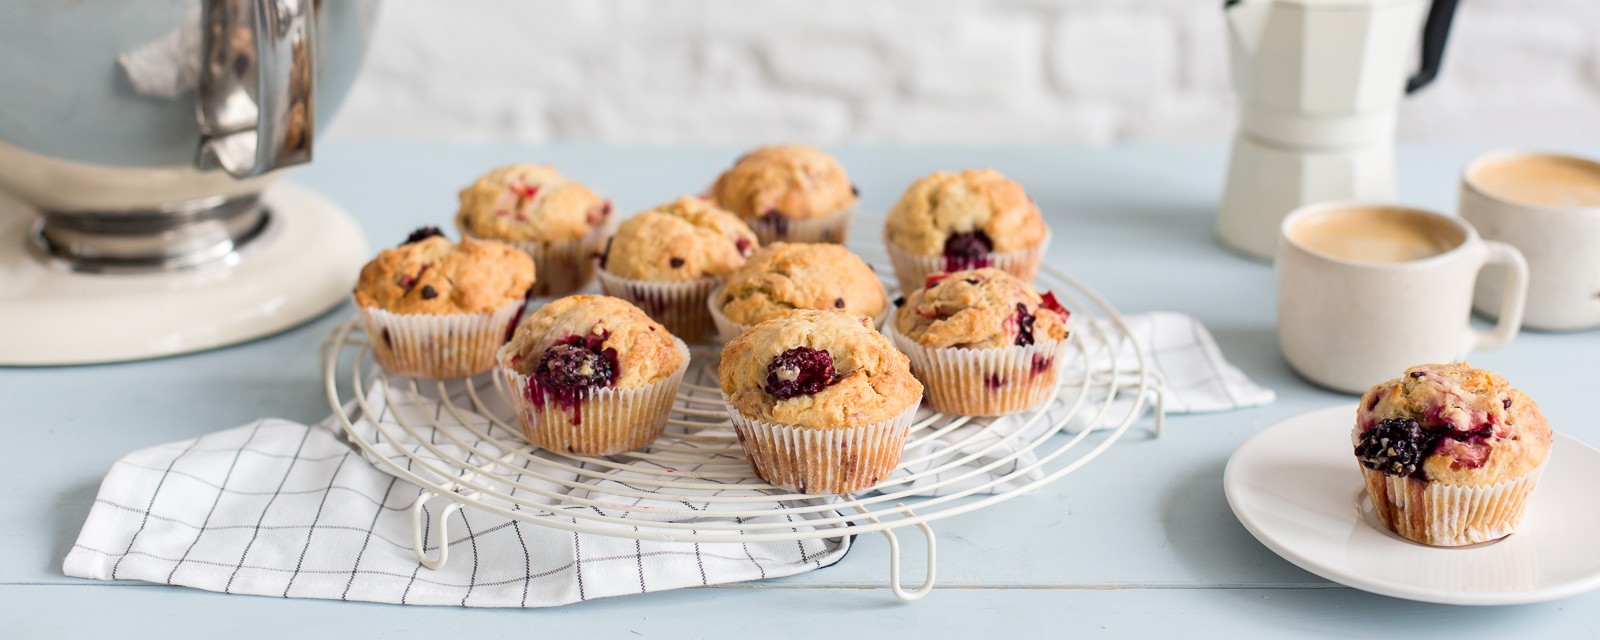 Import-Recipe - Rhubarb & blackberry muffins